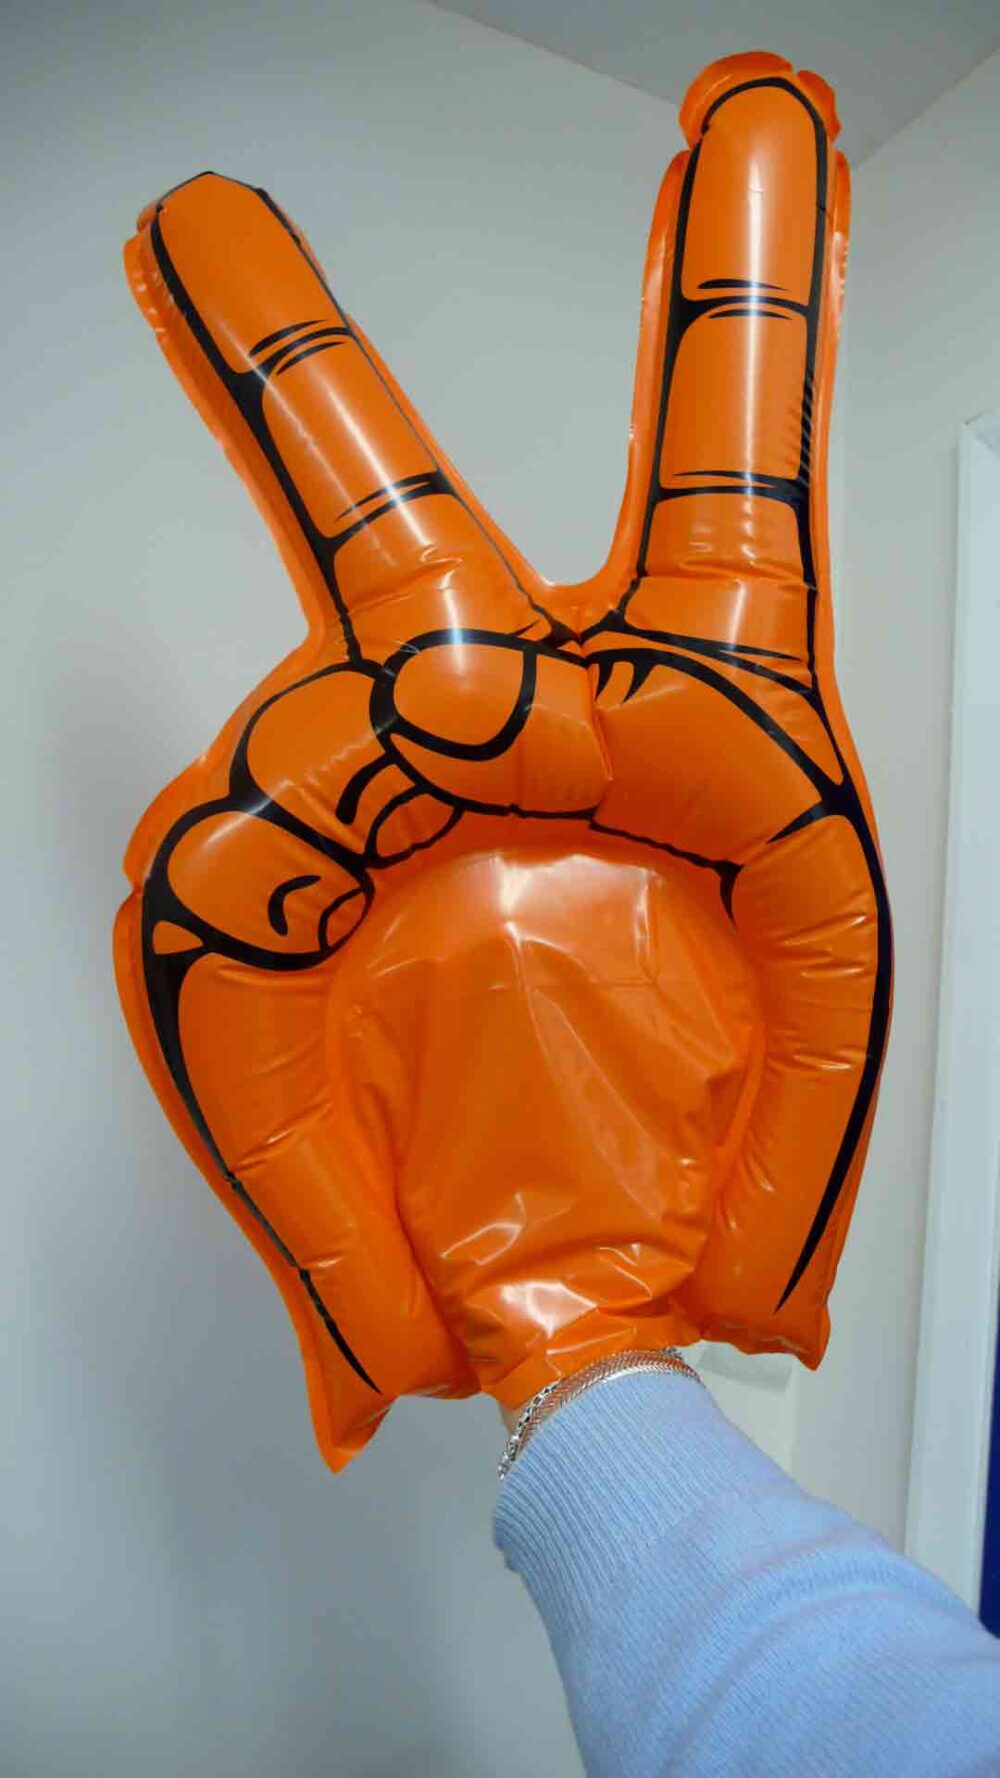 Orange inflatable victory salute hand